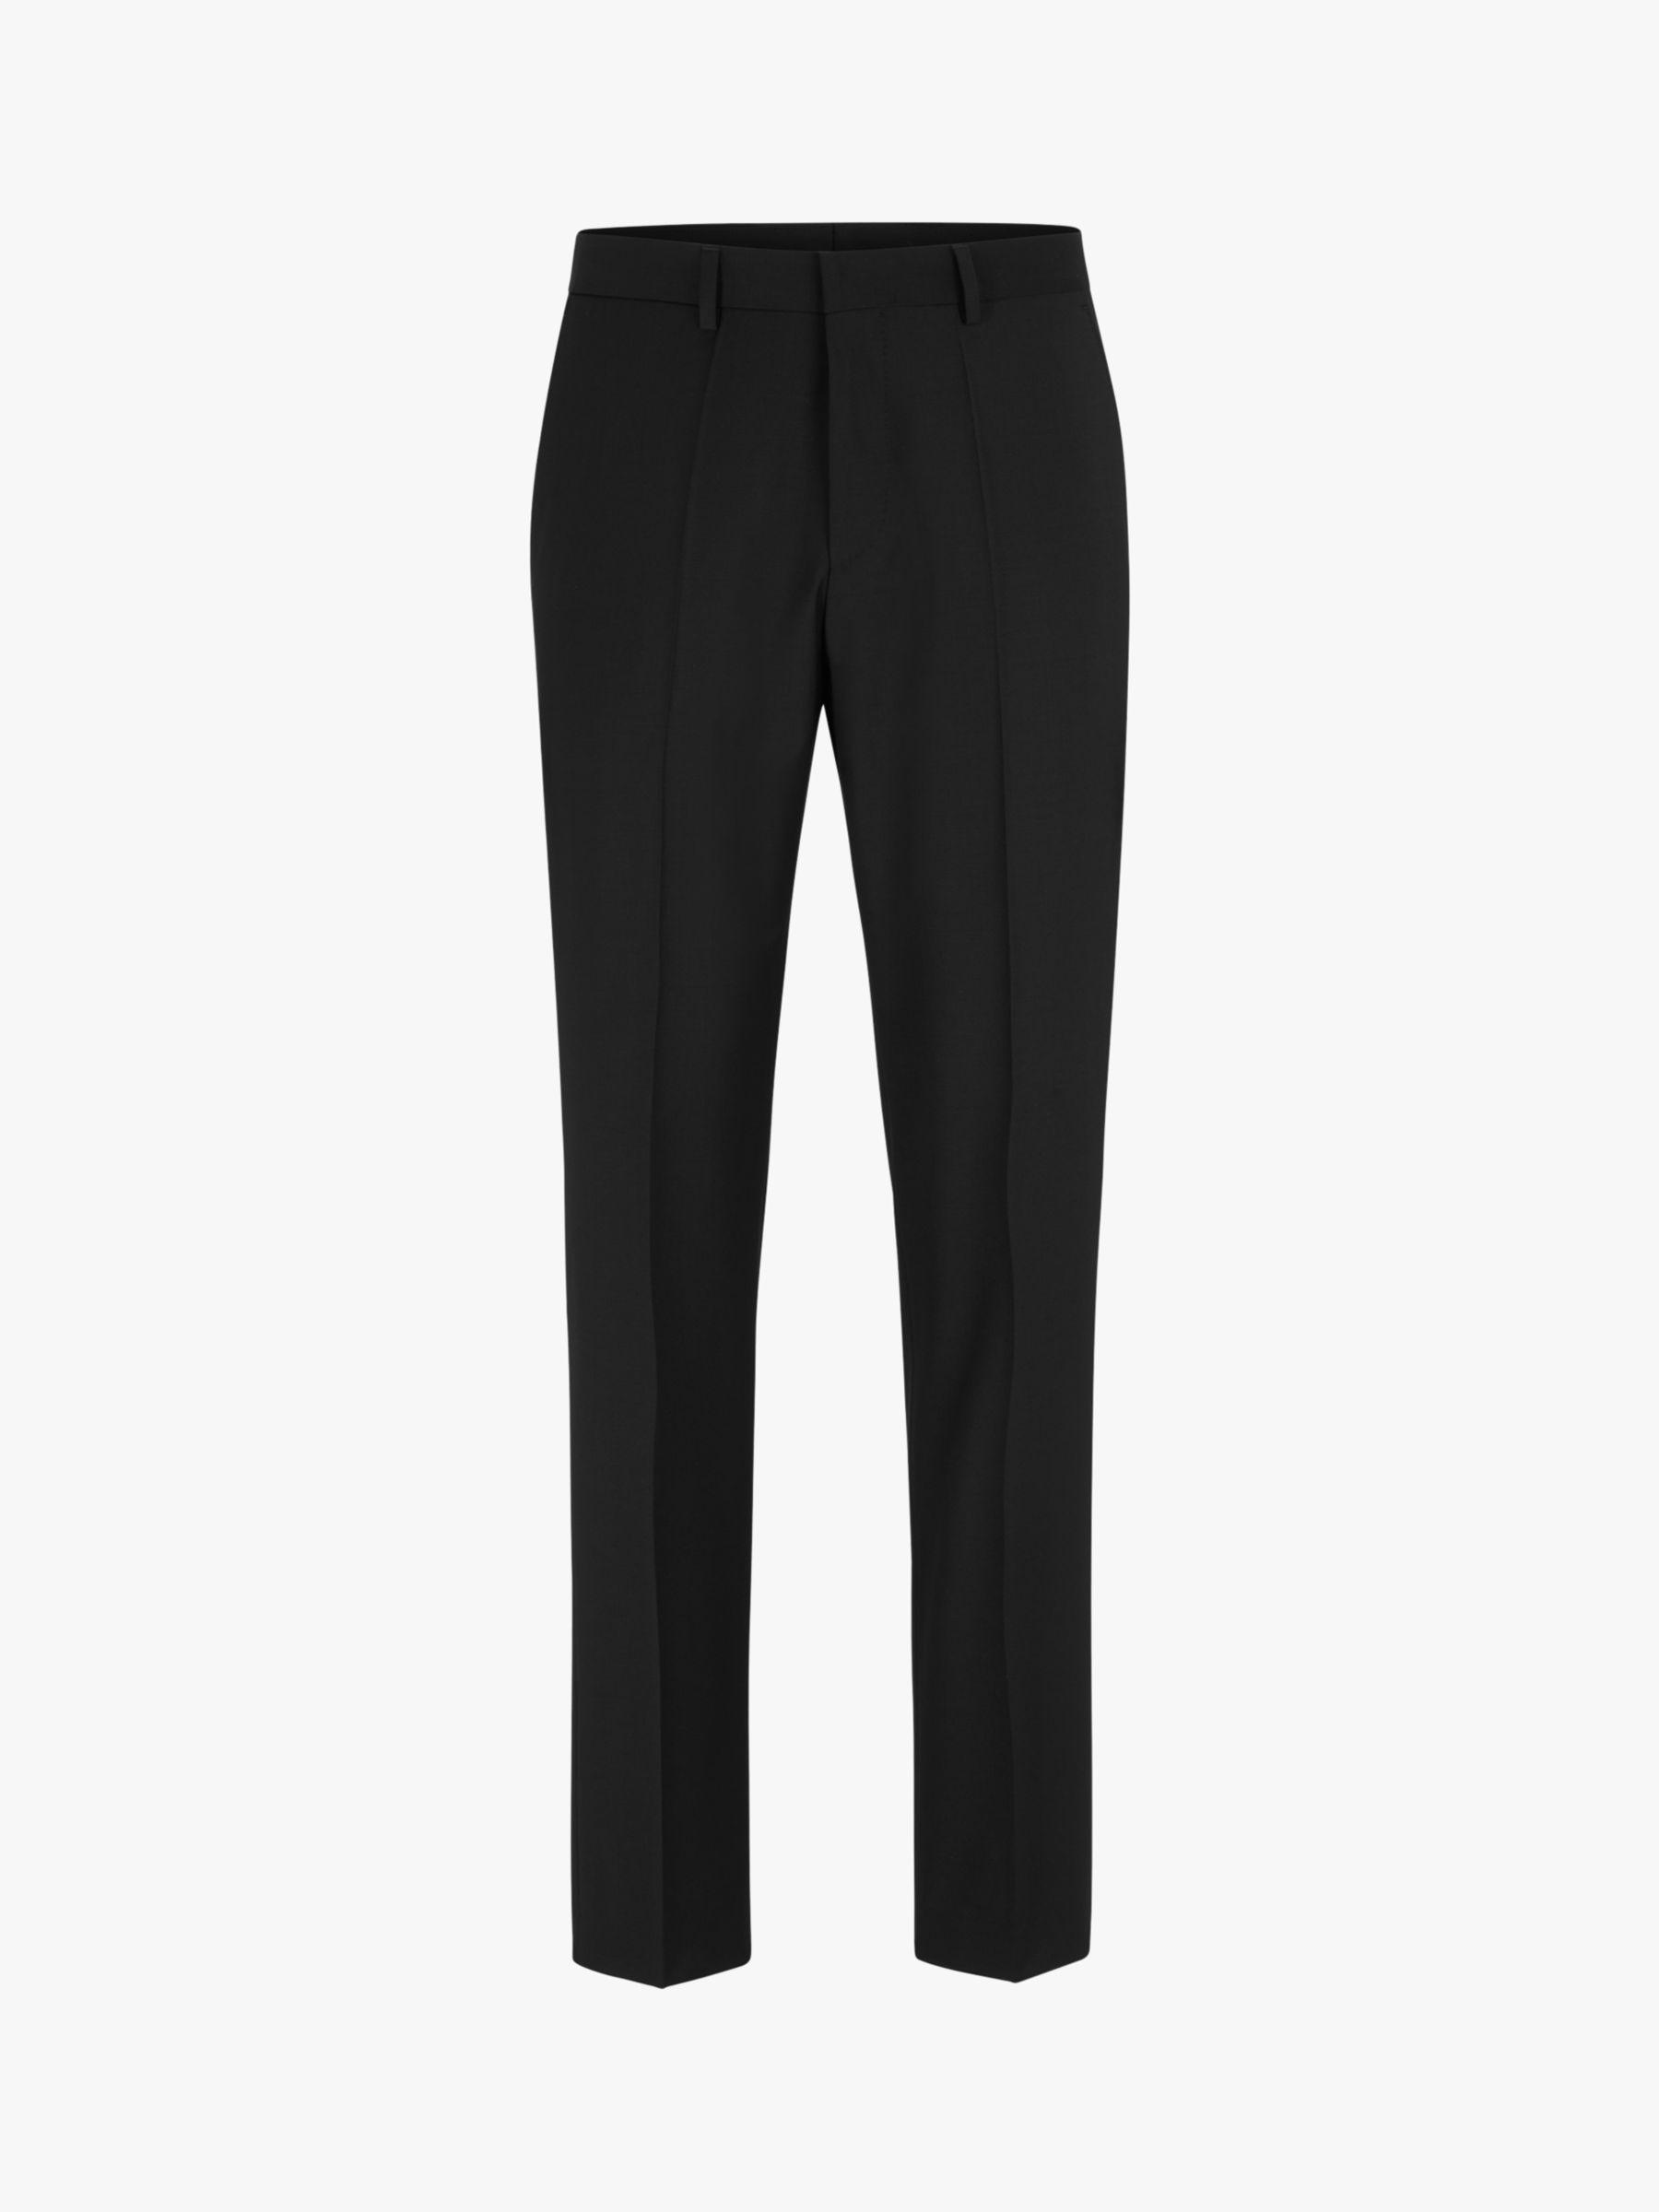 HUGO BOSS Leon Regular Fit Wool Blend Suit Trousers, Black, 30R